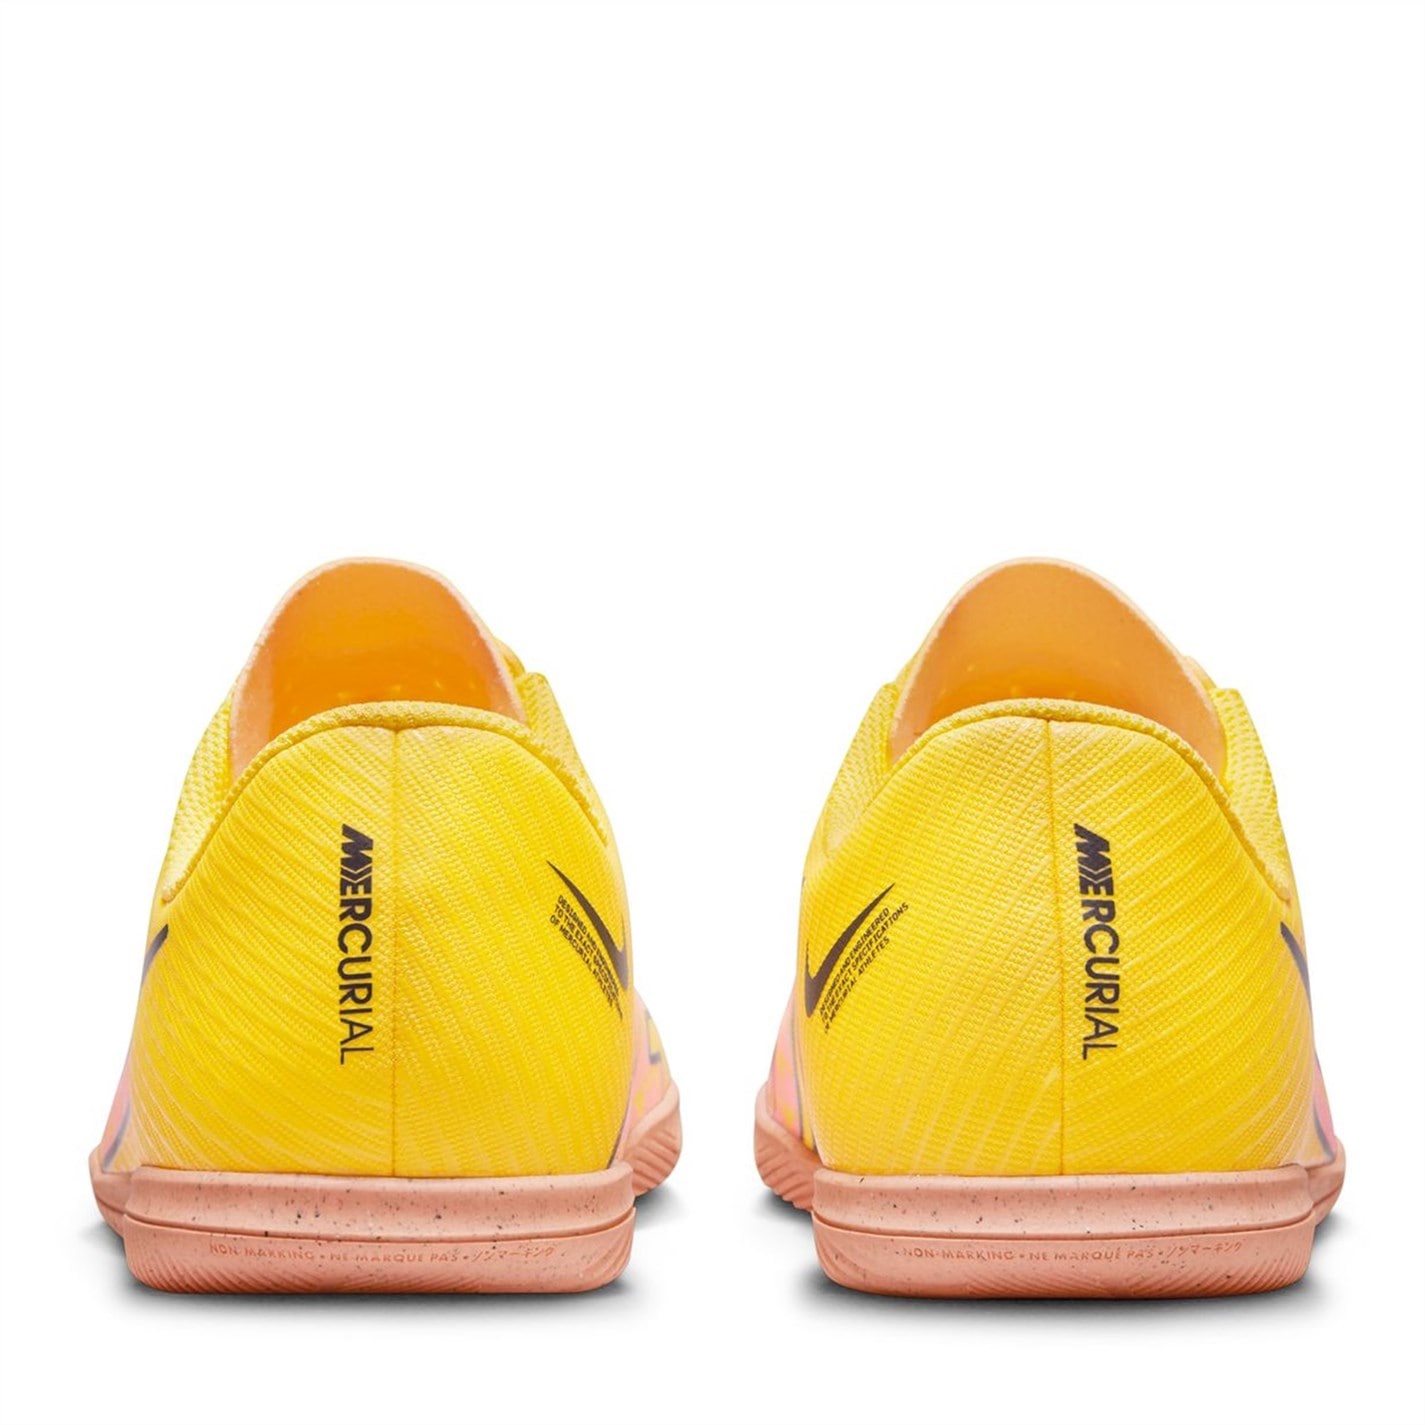 Adidasi fotbal de sala Nike Mercurial Vapor Club pentru copii galben portocaliu